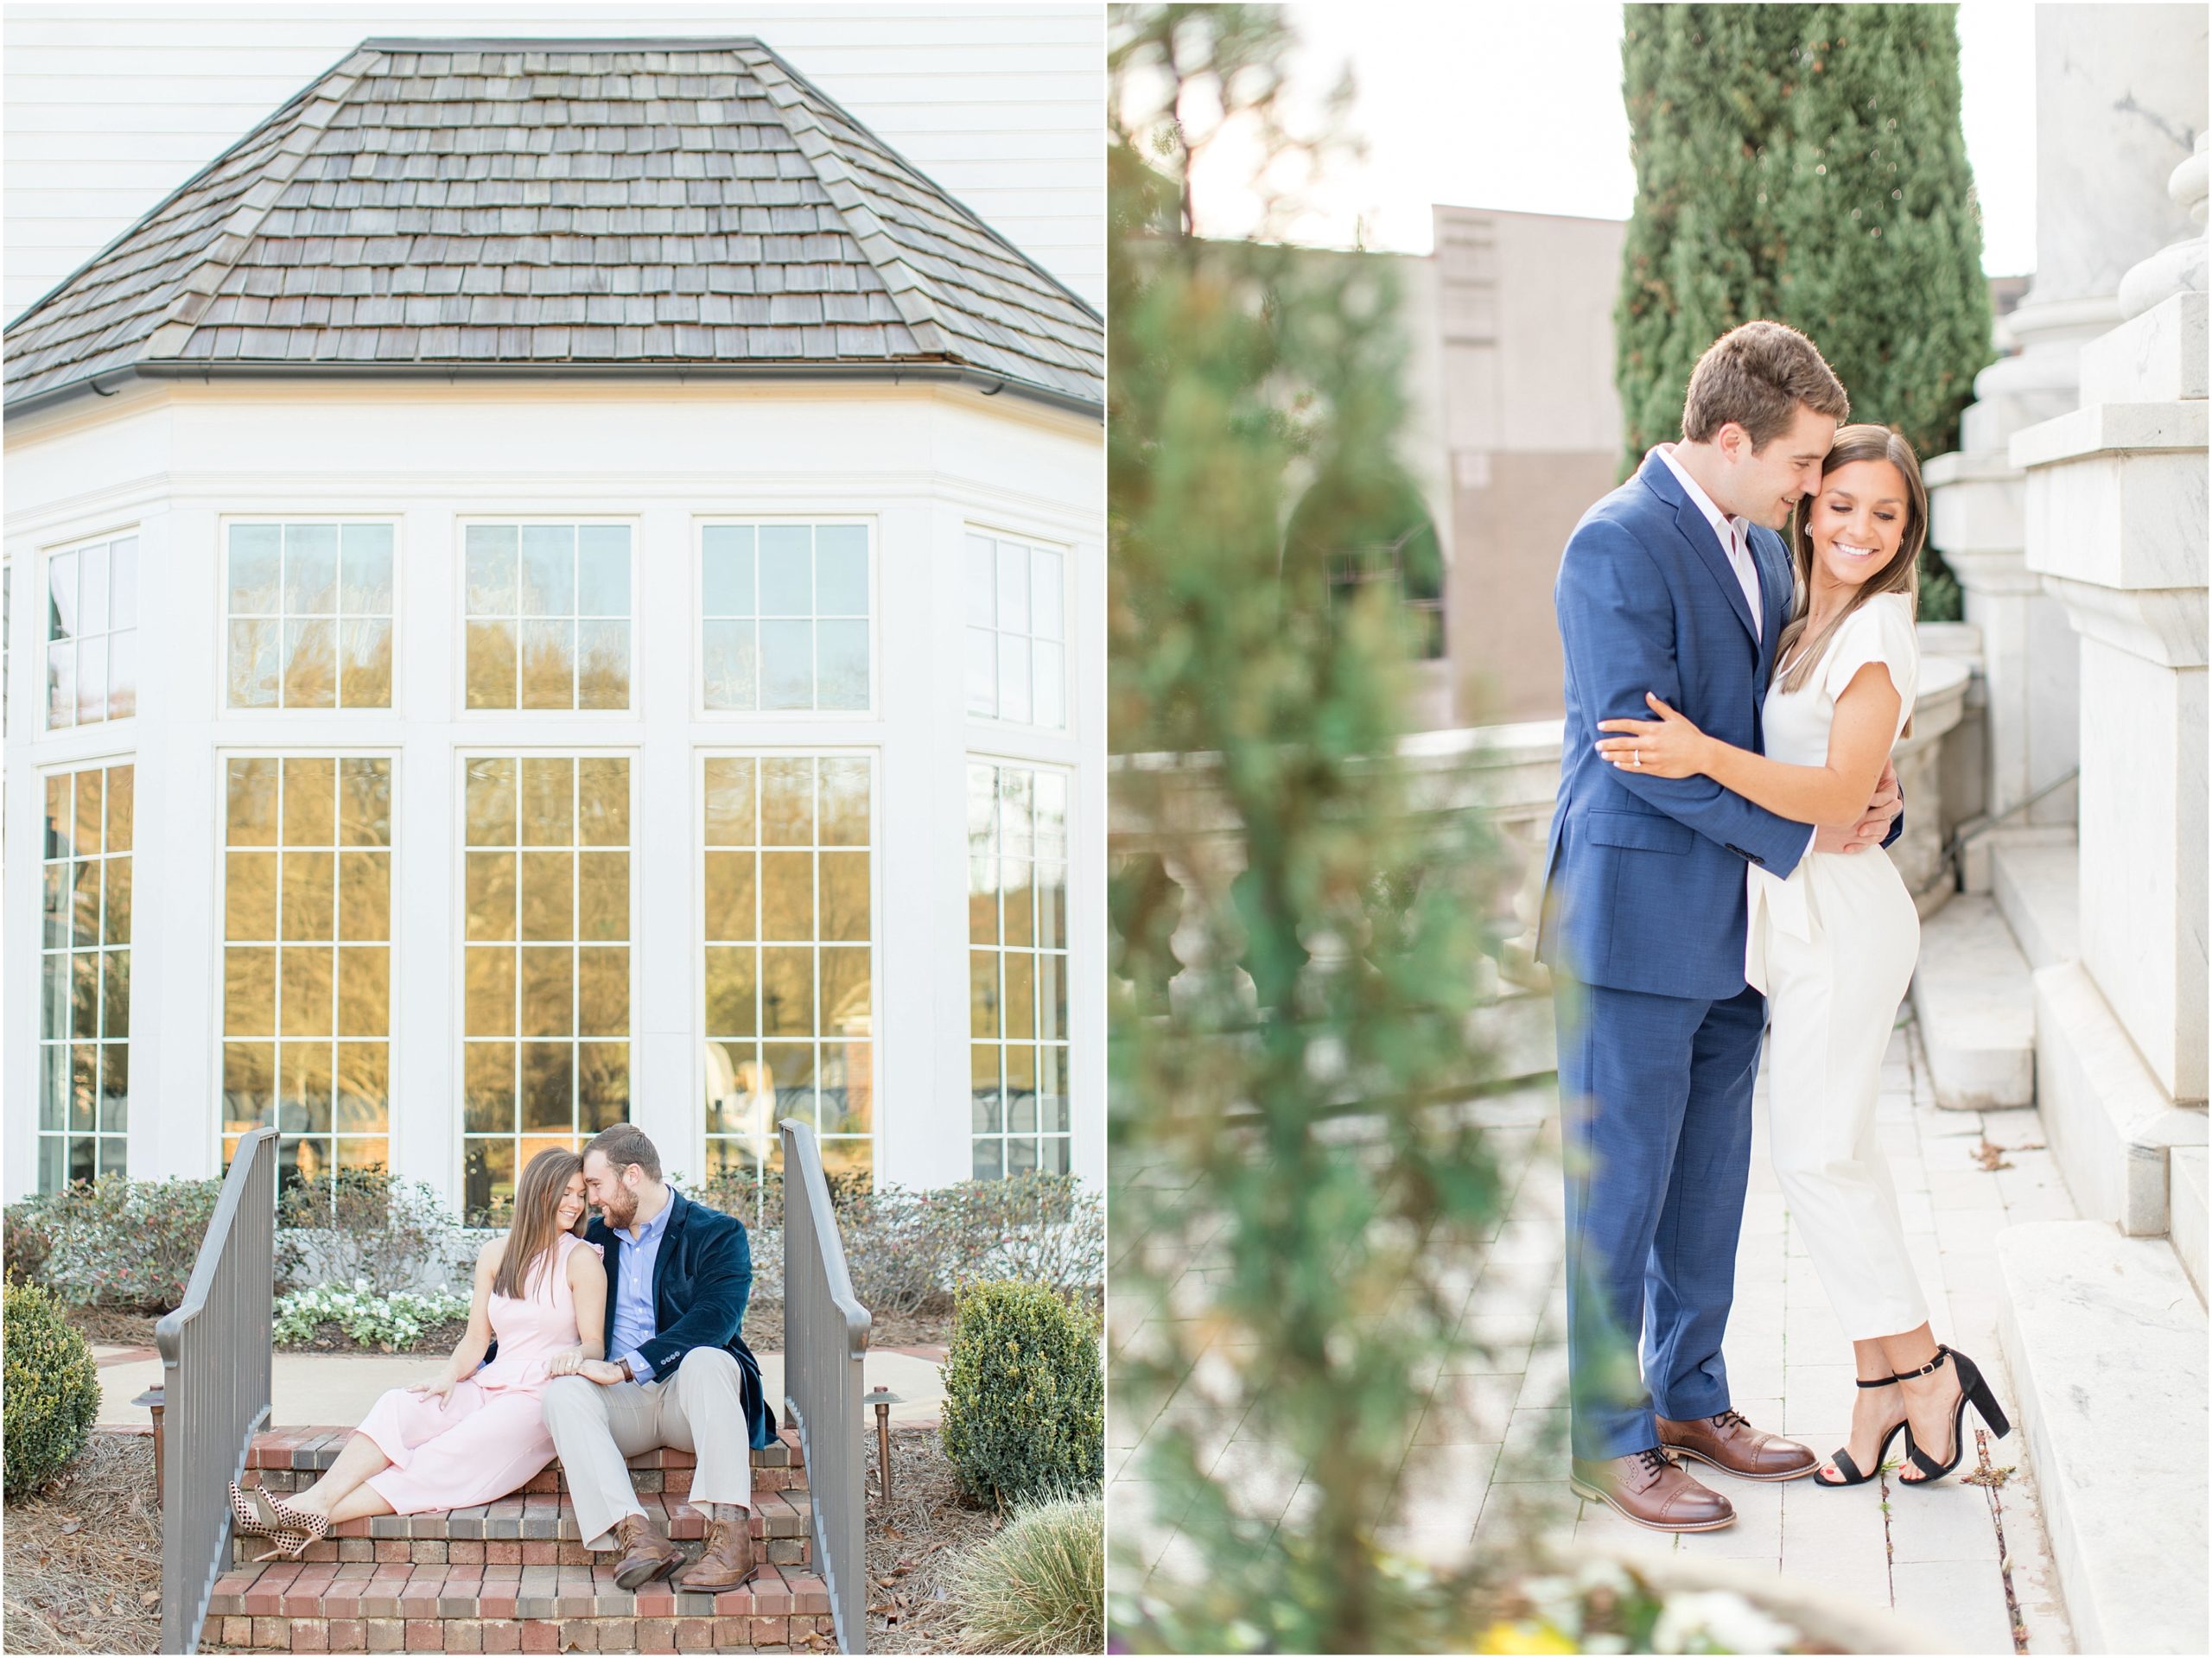 Birmingham, Alabama Wedding Photographers Best of Weddings & Engagements 2019 brides read this